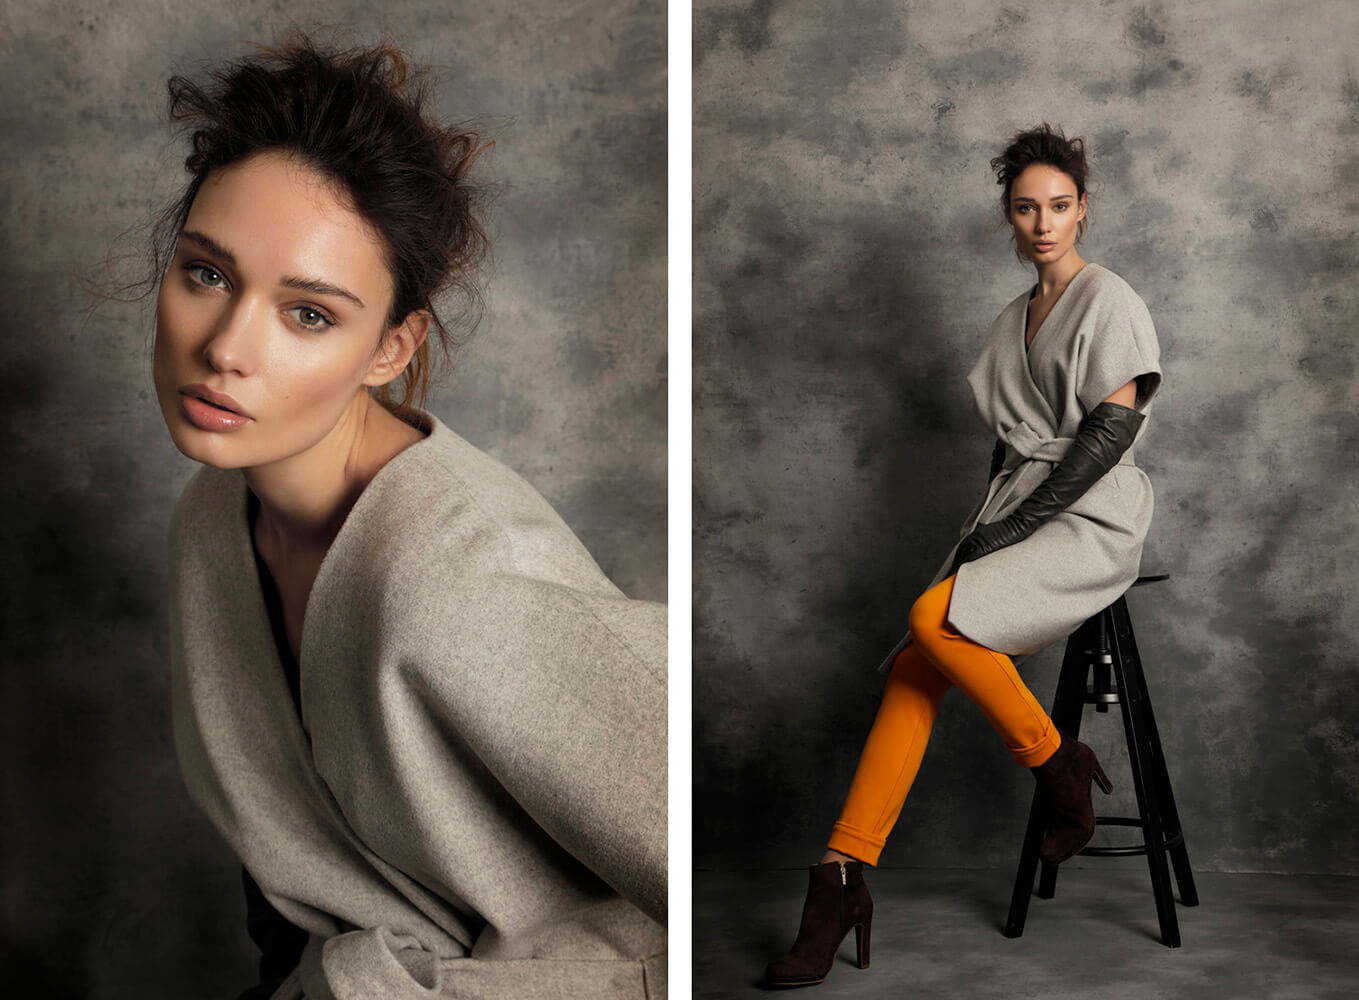 Angel-Ruiz-Ruiz-Fashion-Photographer-Campaign-FW-2017-Archeologie-Grey-Jacket-Orange-Jeans-1359x1000